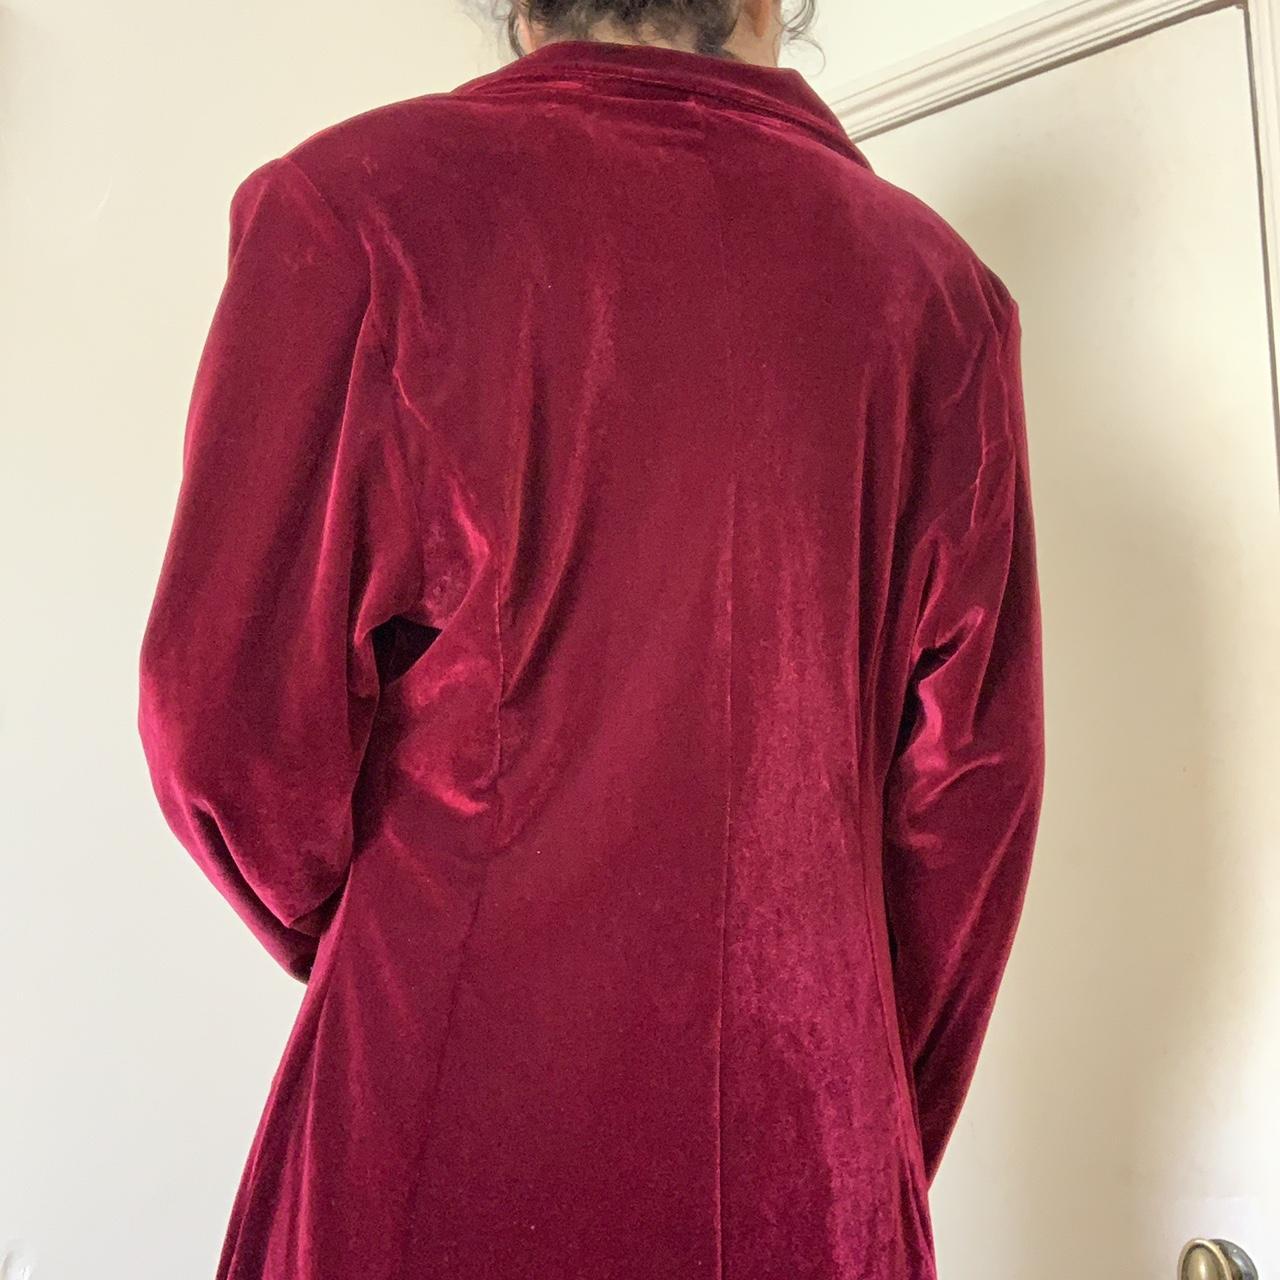 Gorgeous vintage maxi red velvet coat with button up... - Depop